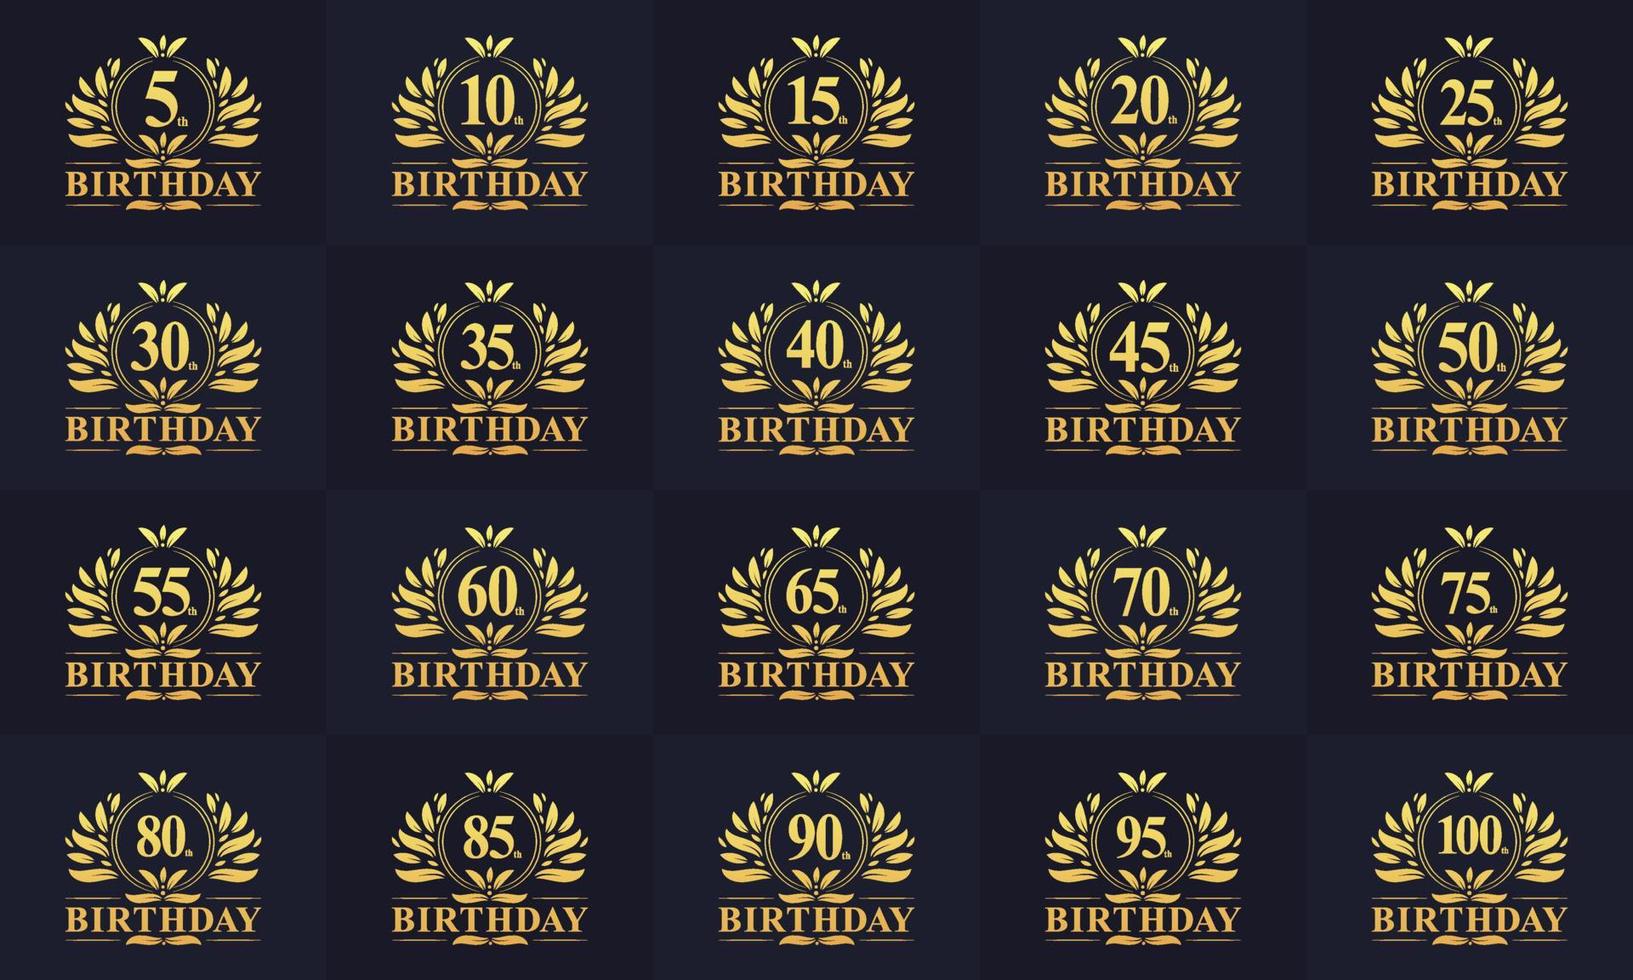 gelukkige verjaardag logo bundel. retro vintage verjaardag logo set. 5e, 10e, 15e, 20e, 25e, 30e, 35e, 40e, 45e, 50e verjaardagsviering logo bundel. vector